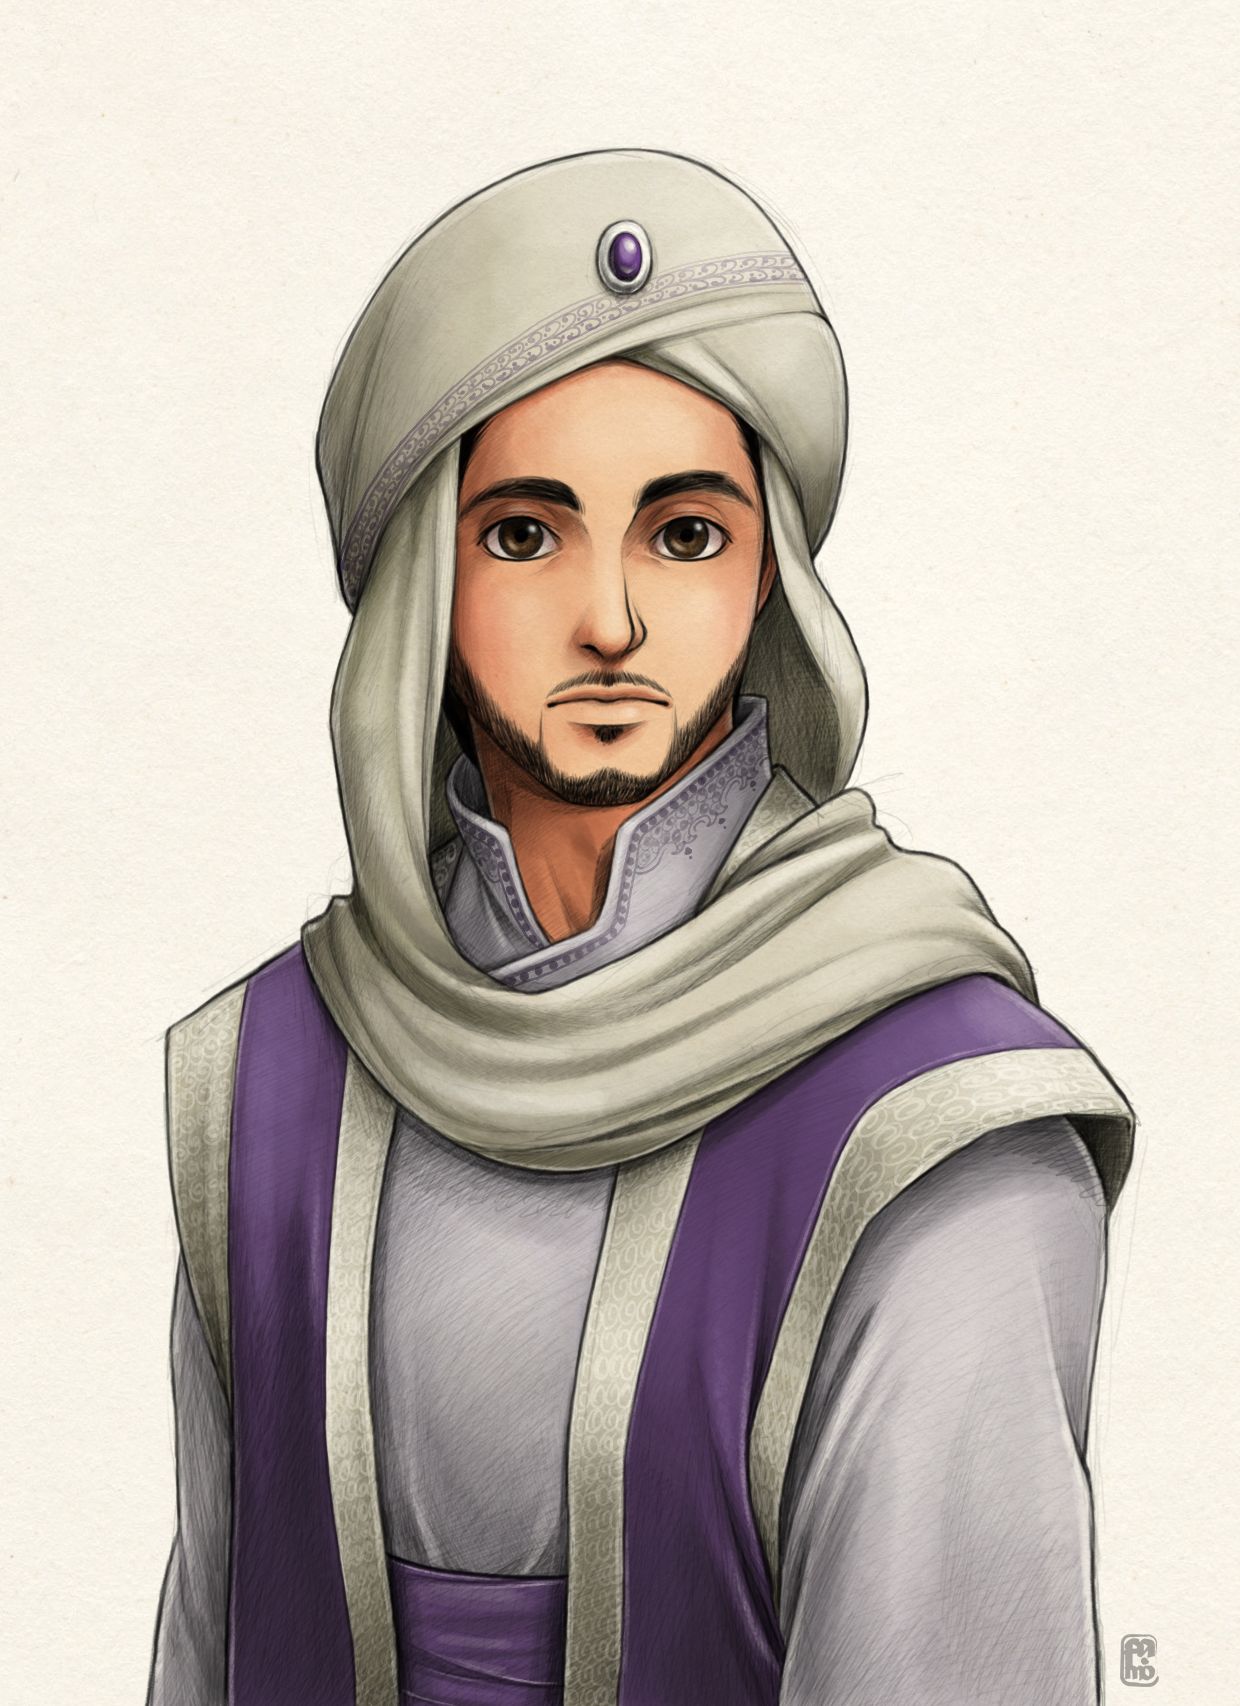 Arabian Prince illustrated using photohop and wacom tablet